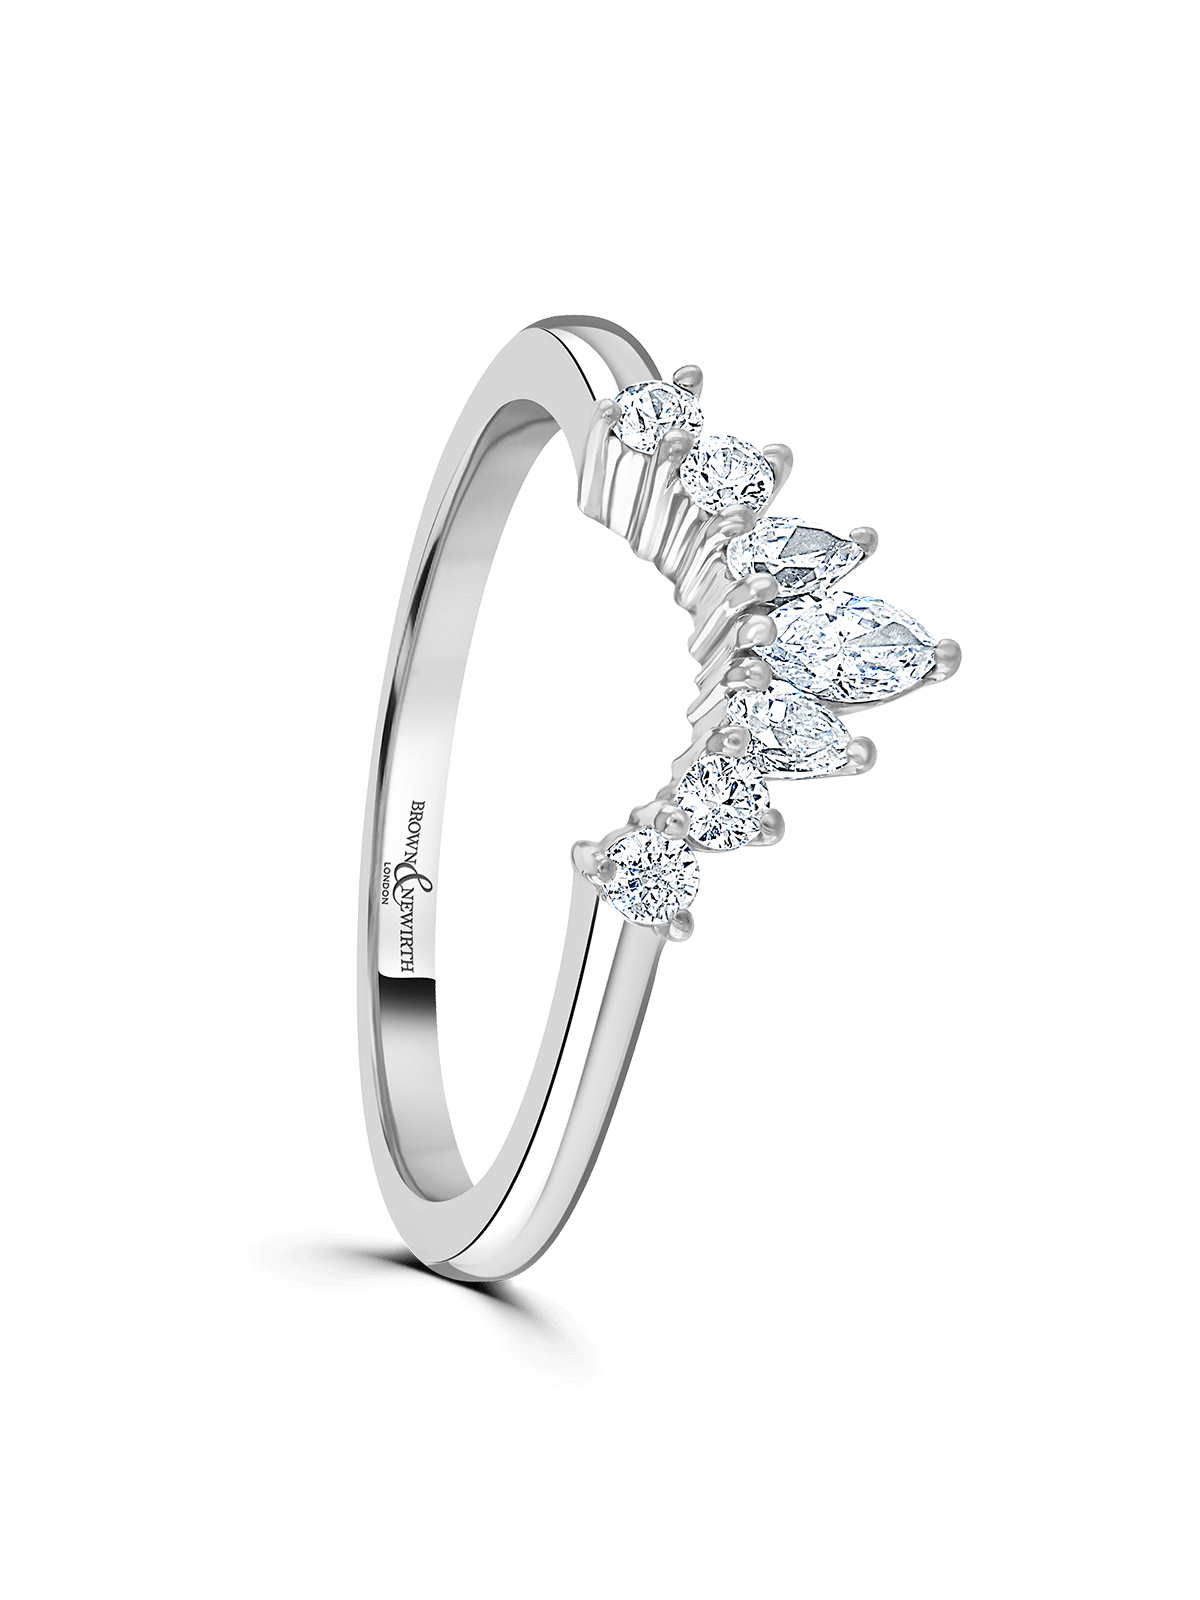 Brown & Newirth Royal 0.33ct Marquise, Pear & Brilliant Cut Diamond Wedding Ring in Platinum